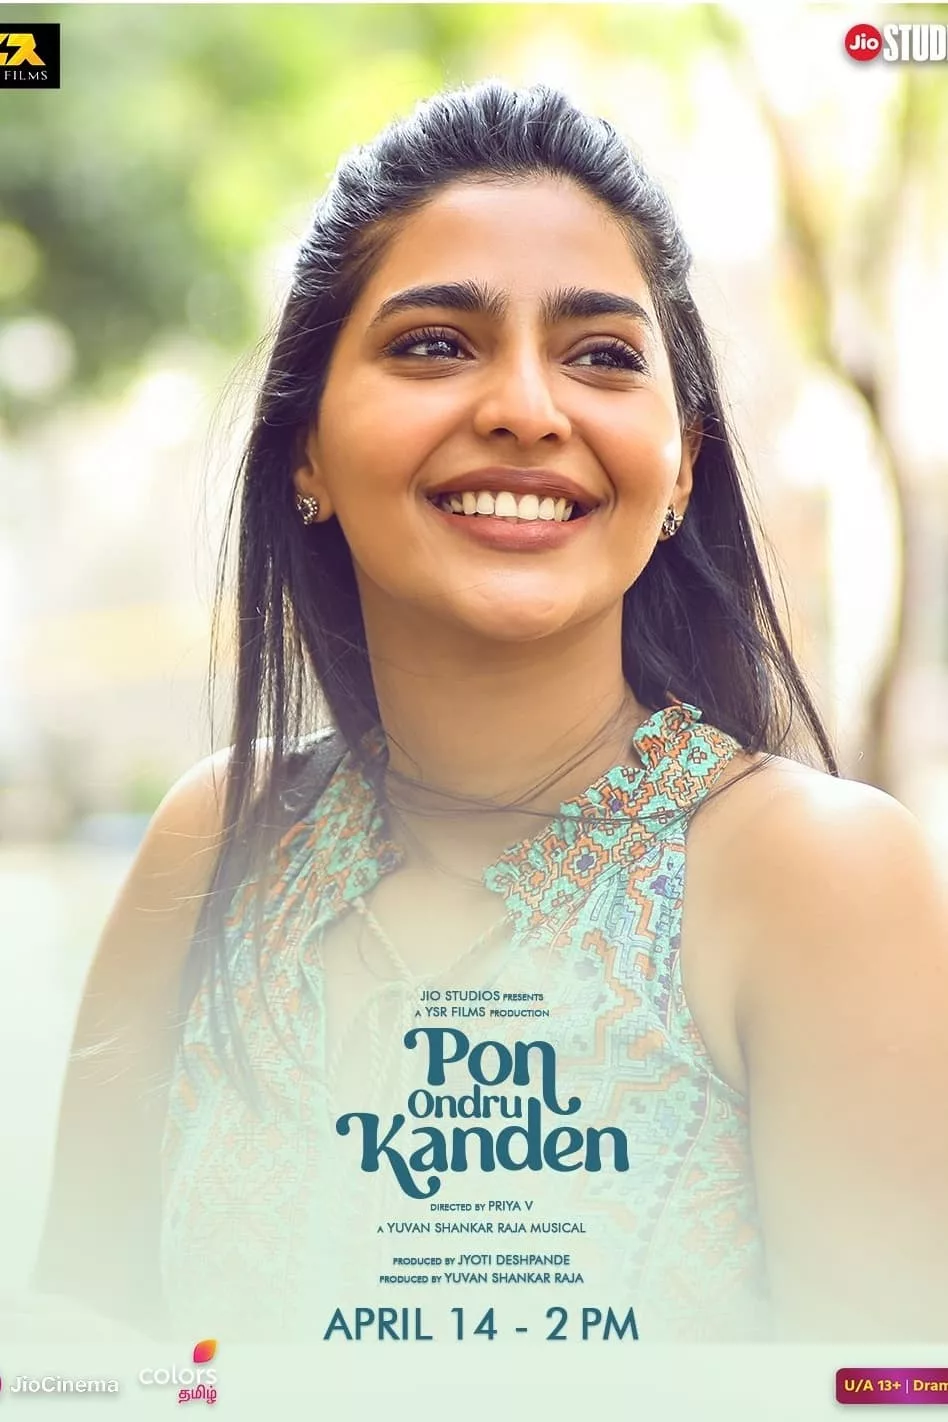 Poster for the movie "Pon Ondru Kanden"